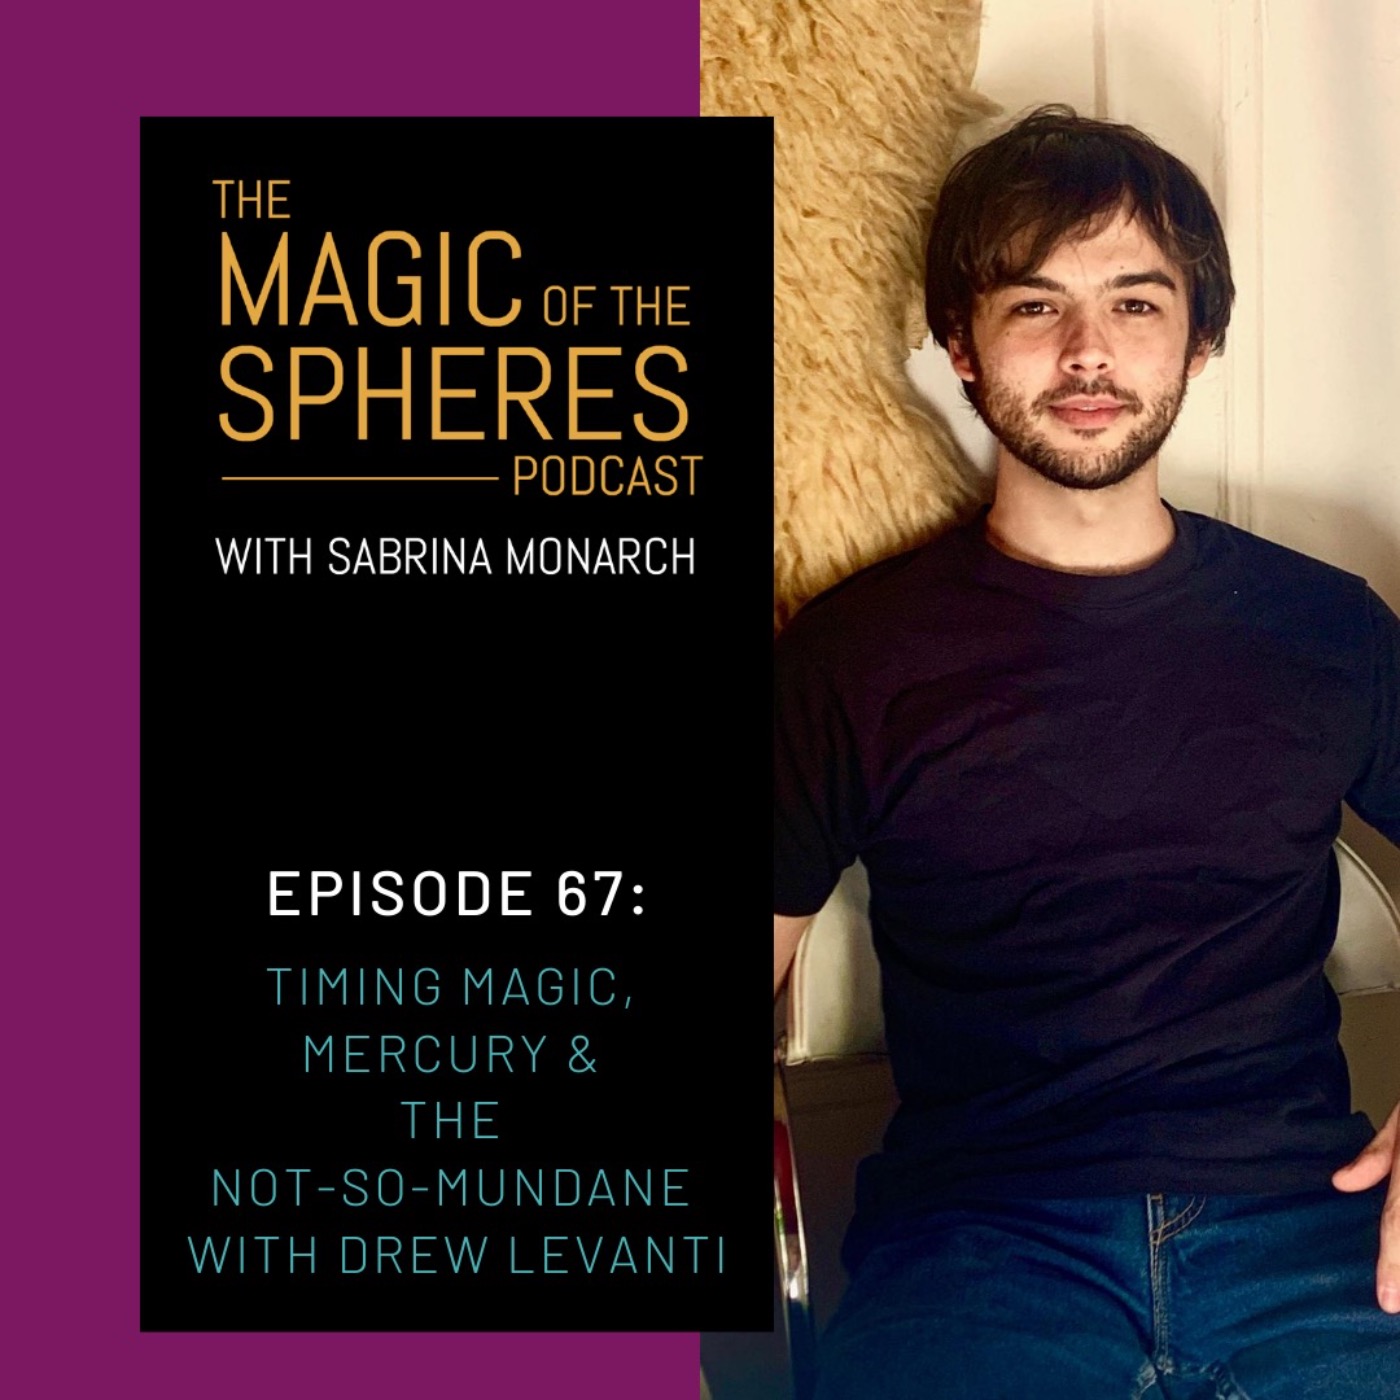 Timing Magic, Mercury & the not-so-mundane with Drew Levanti